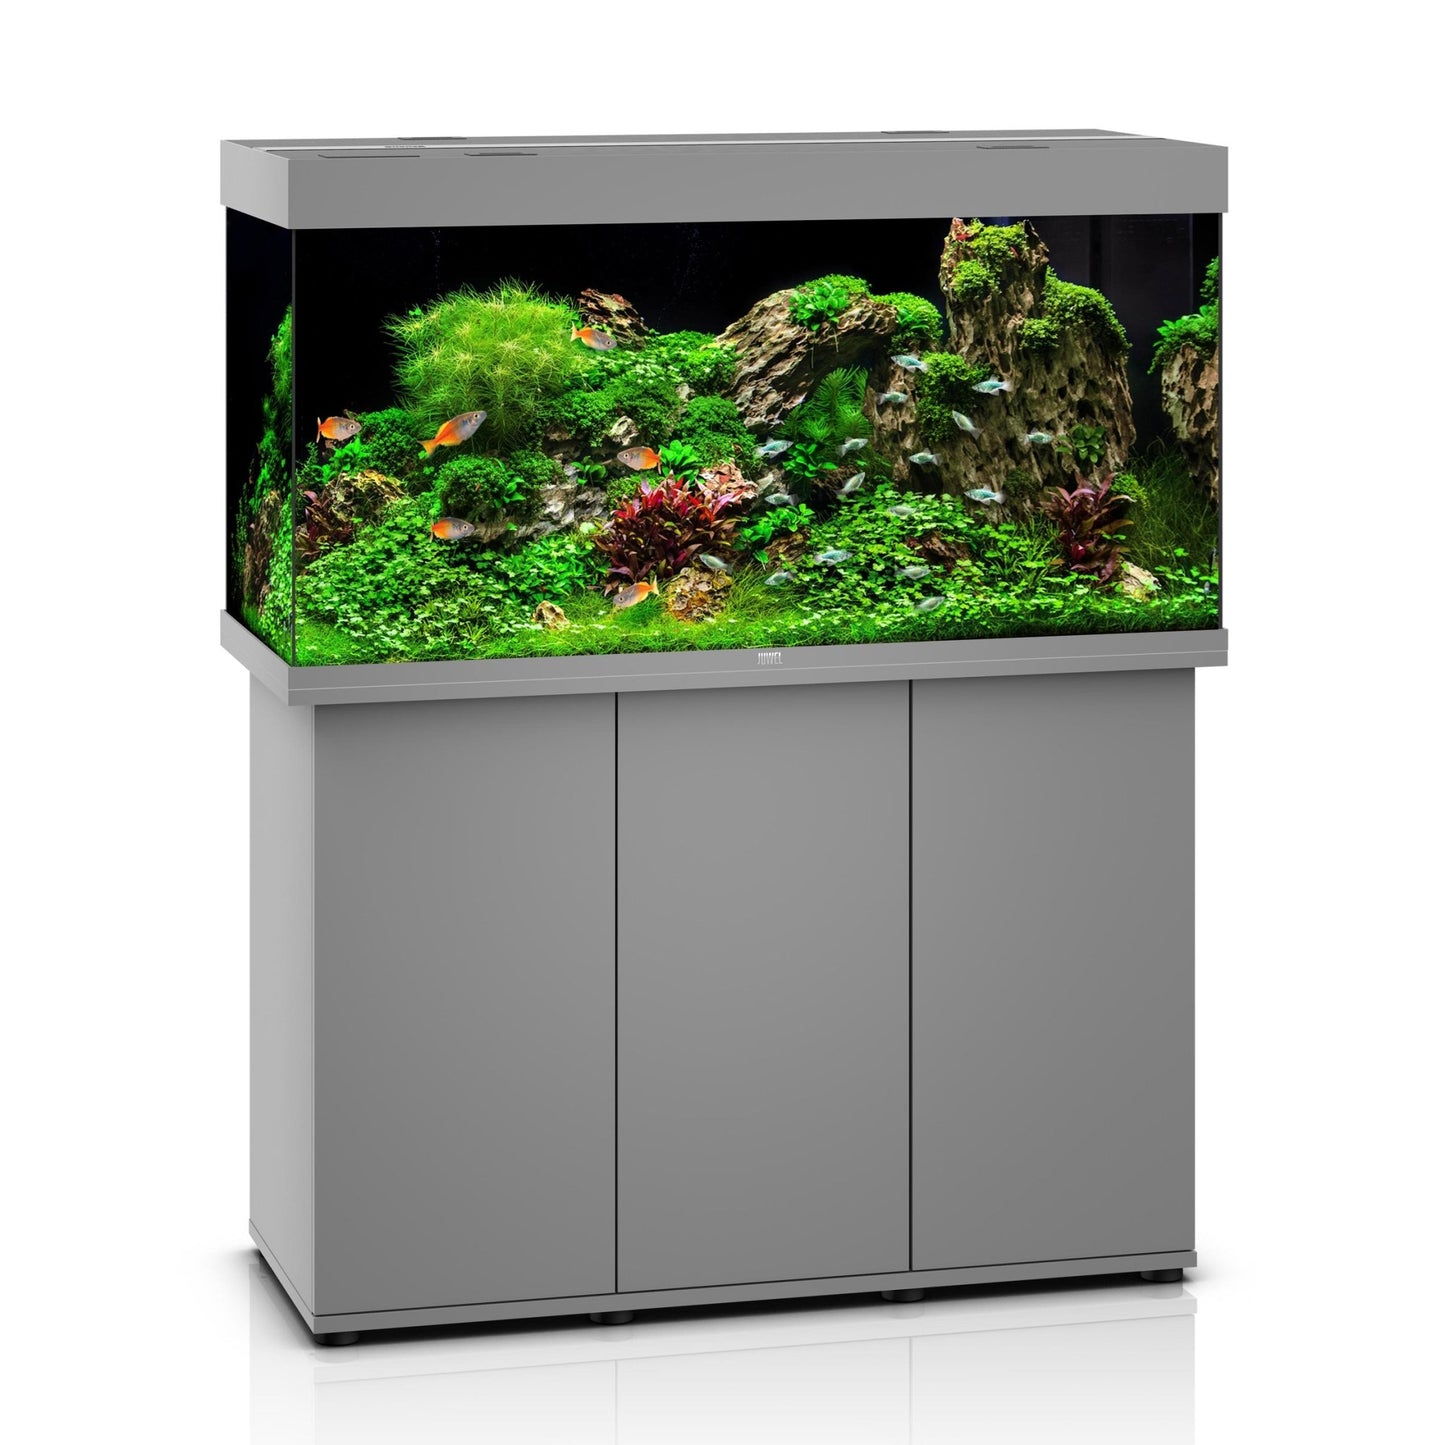 Juwel Rio 350 LED Aquarium and Cabinet (Grey) - Charterhouse Aquatics